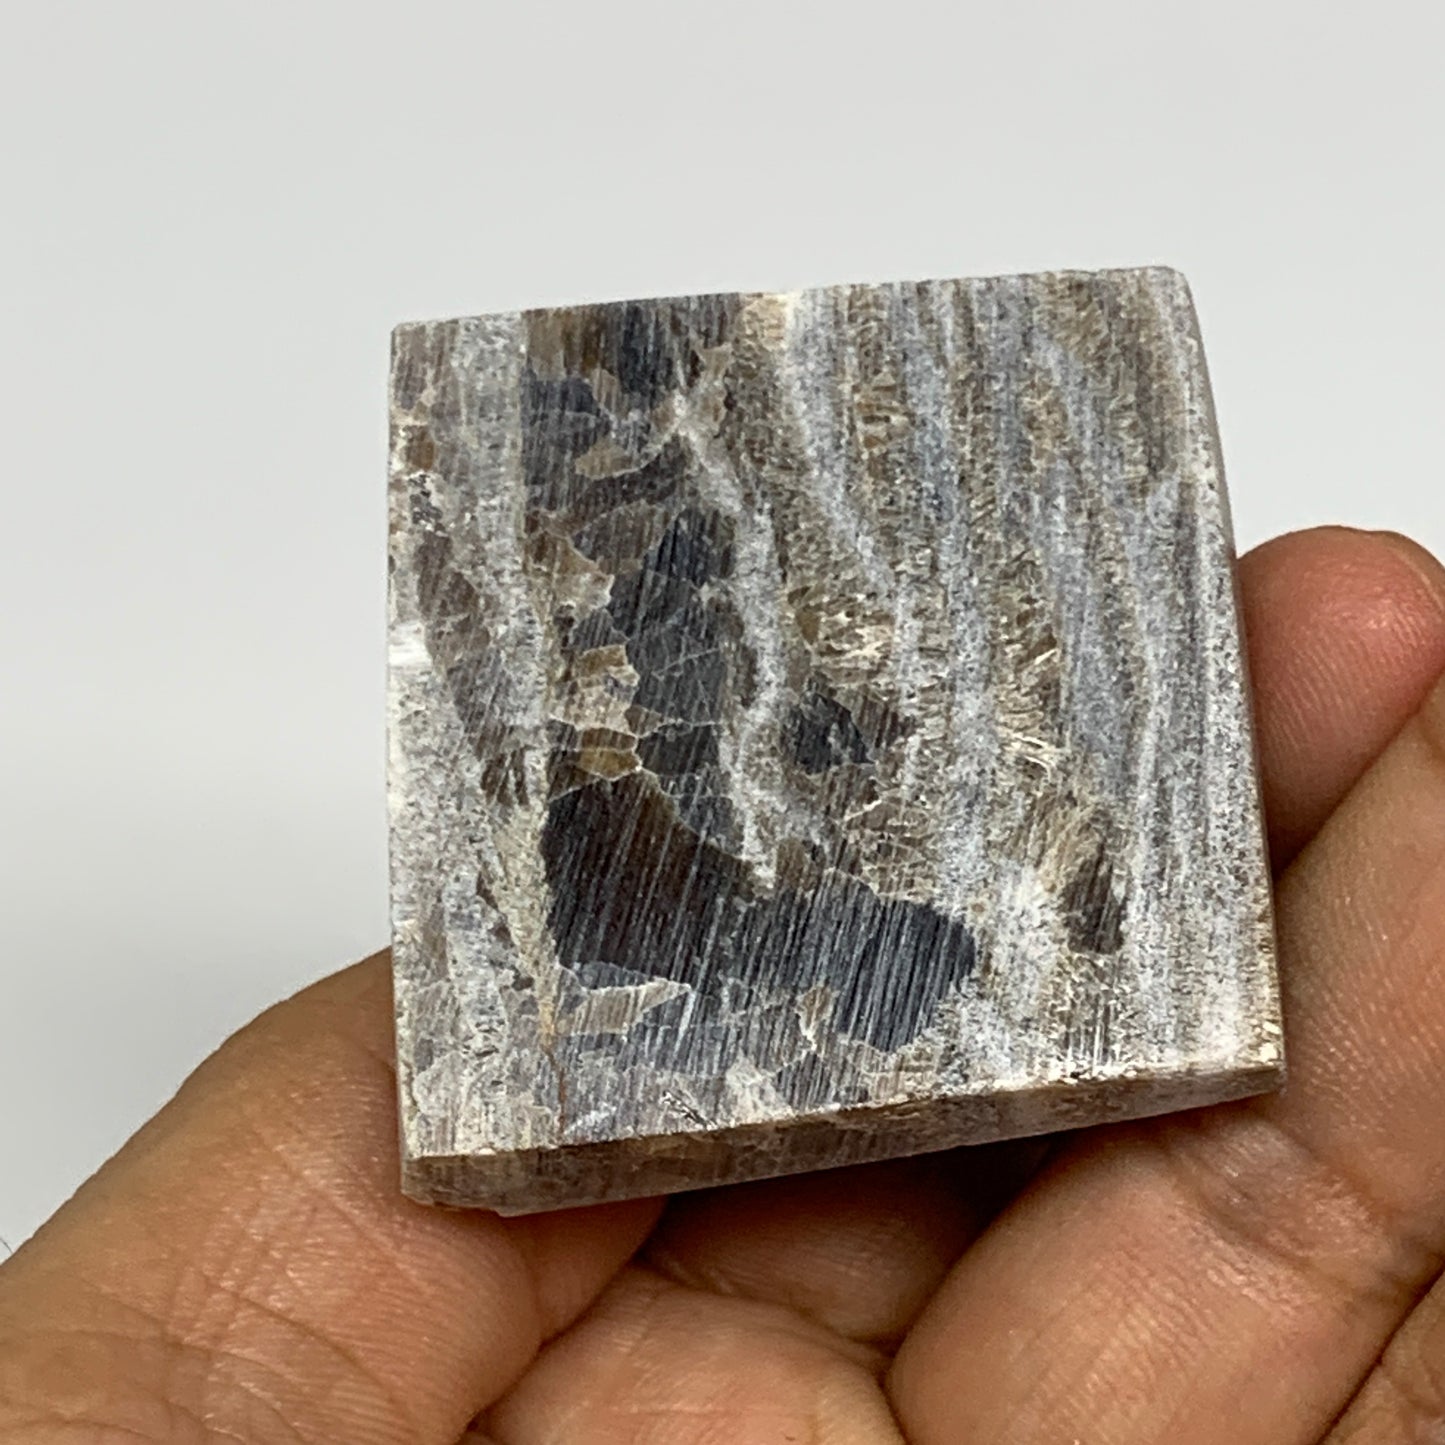 55.8g, 1.2"x1.6"x1.6" Chocolate/Gray Onyx Pyramid Gemstone @Morocco, B19007